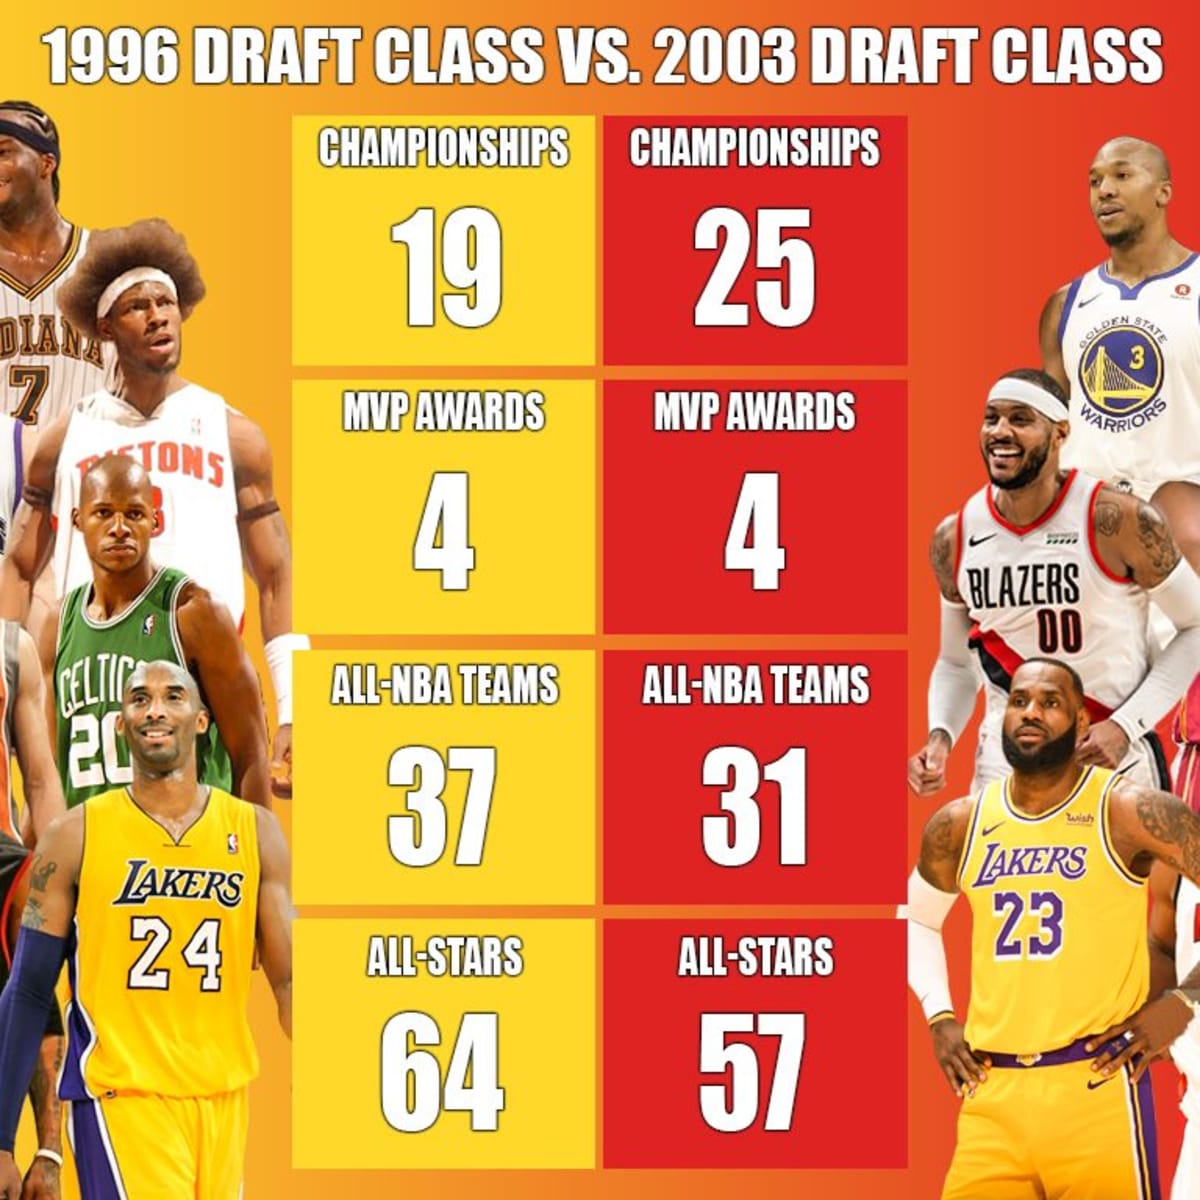 The Full Comparison: 1996 Draft Class vs. 2003 Draft Class